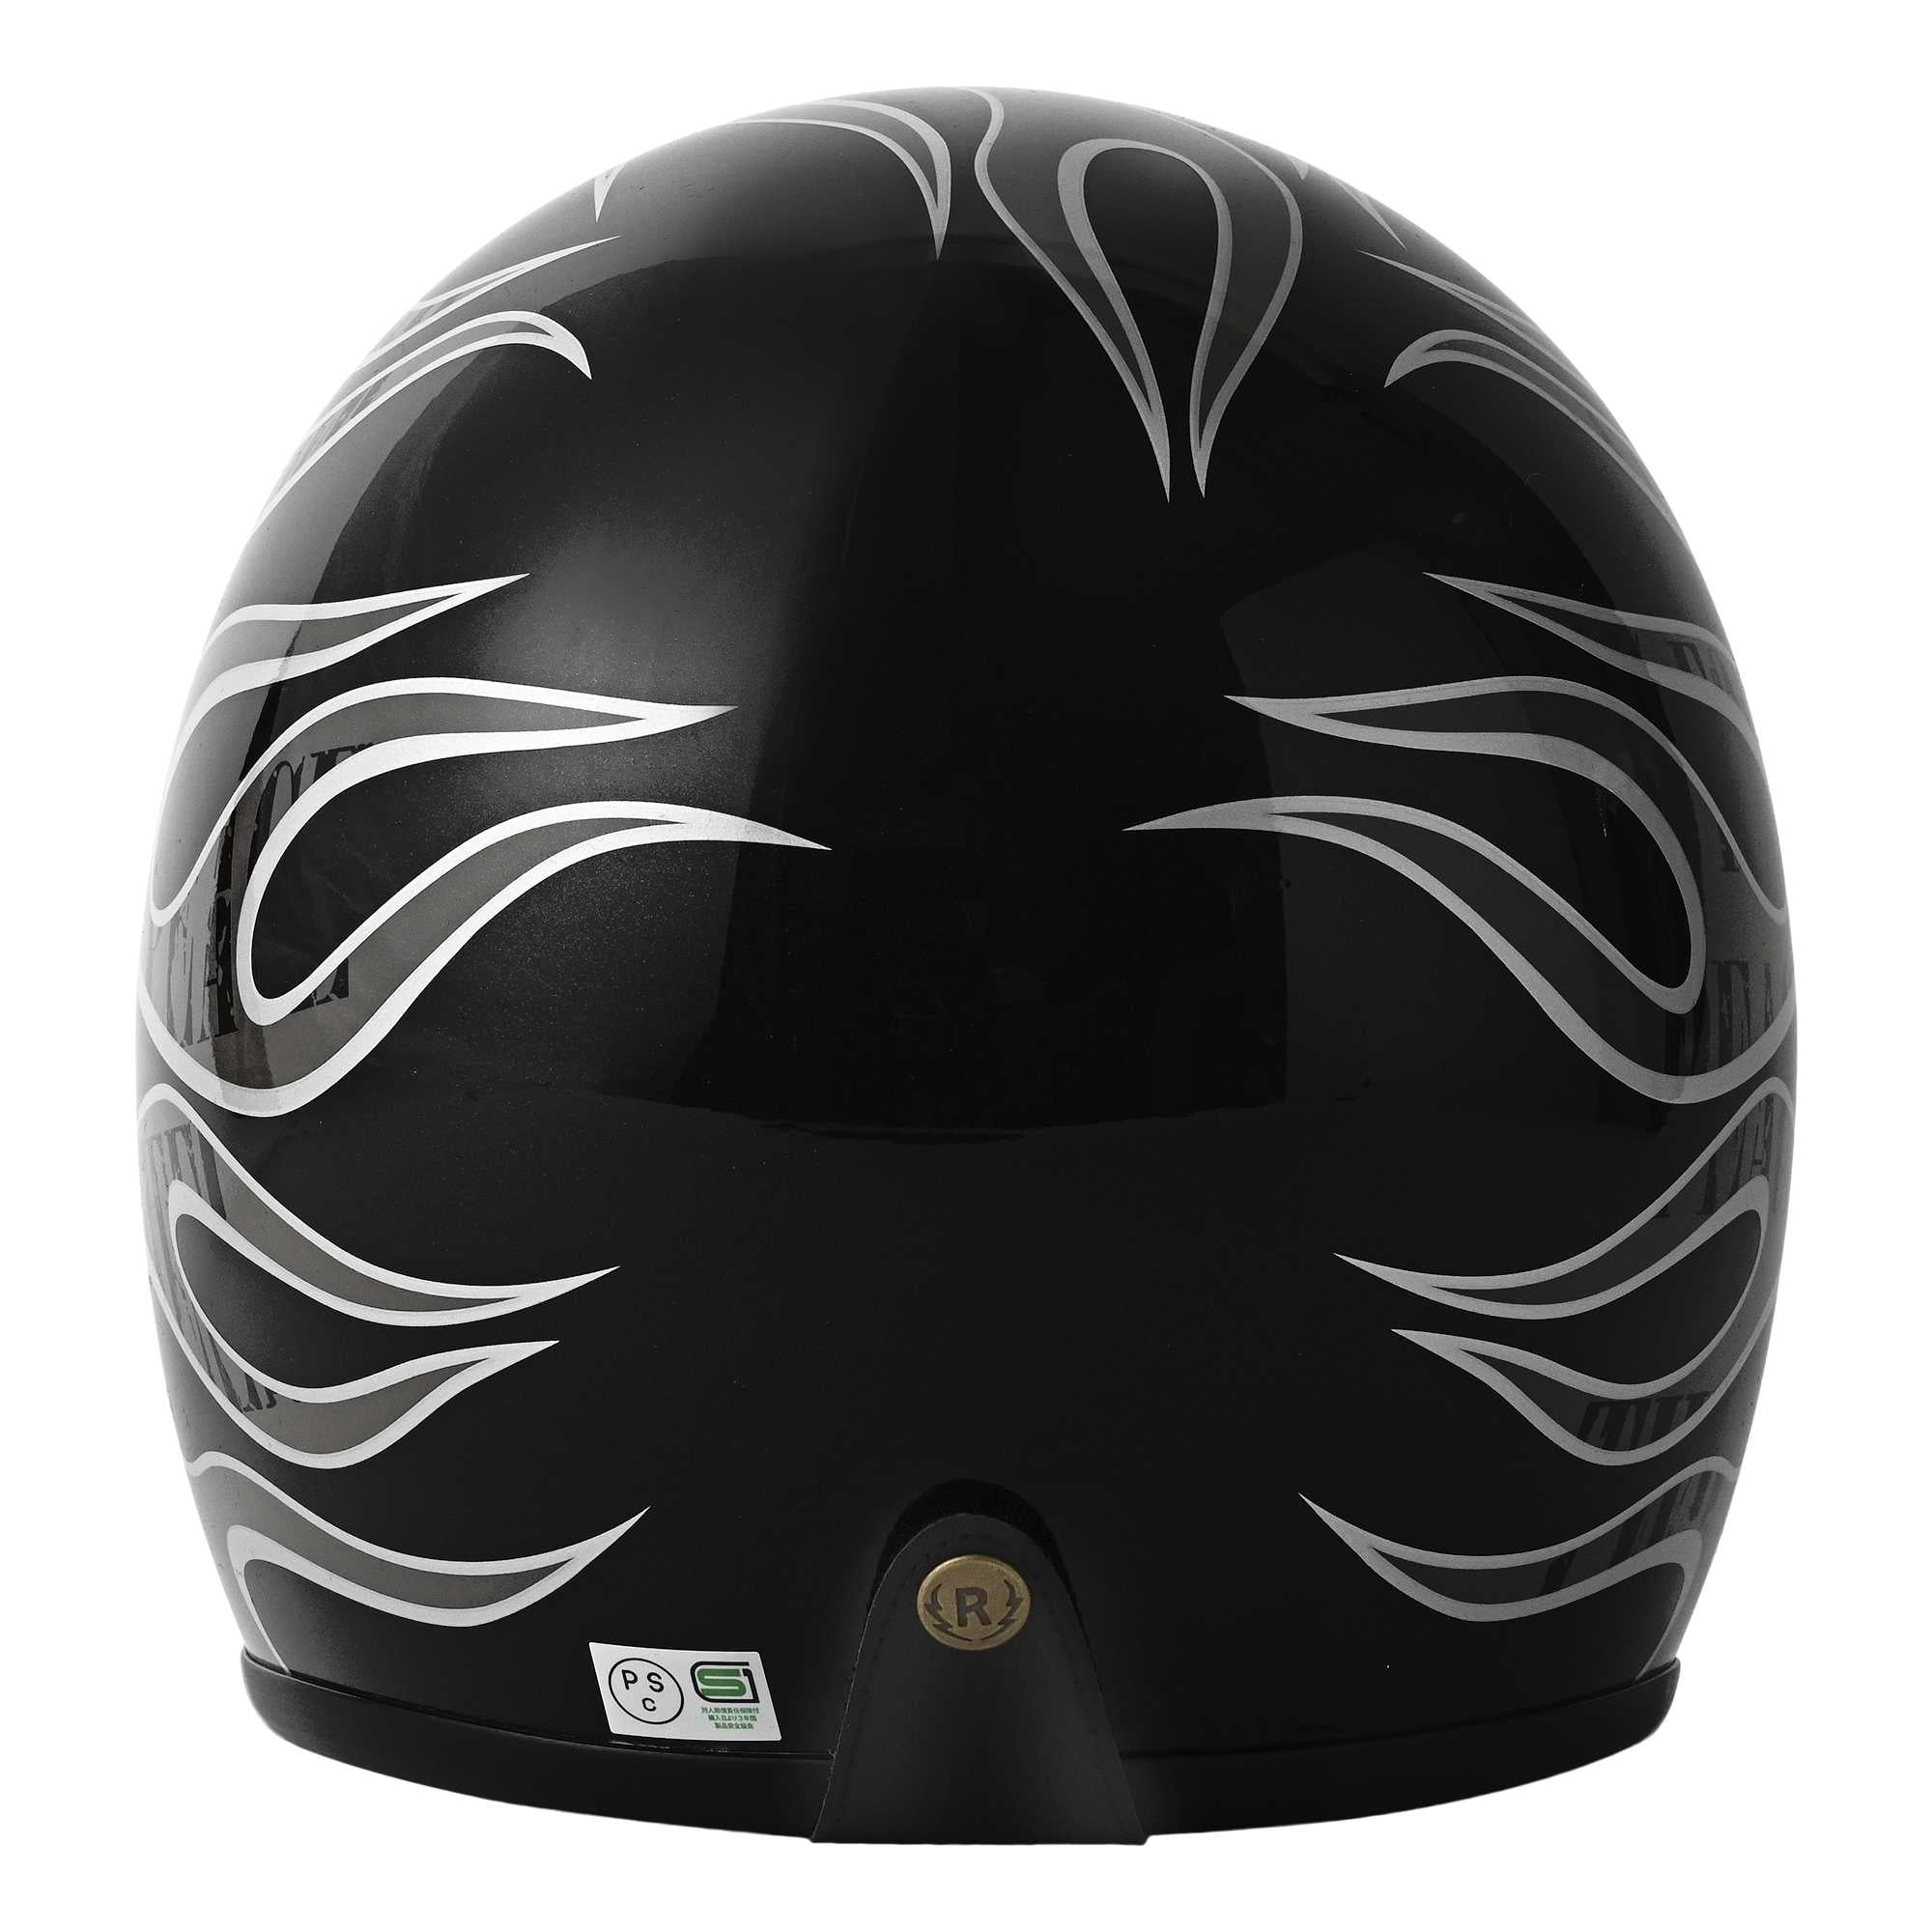 RIDEZ LX FLAMEZ バイク用オープンフェイスジェットヘルメット